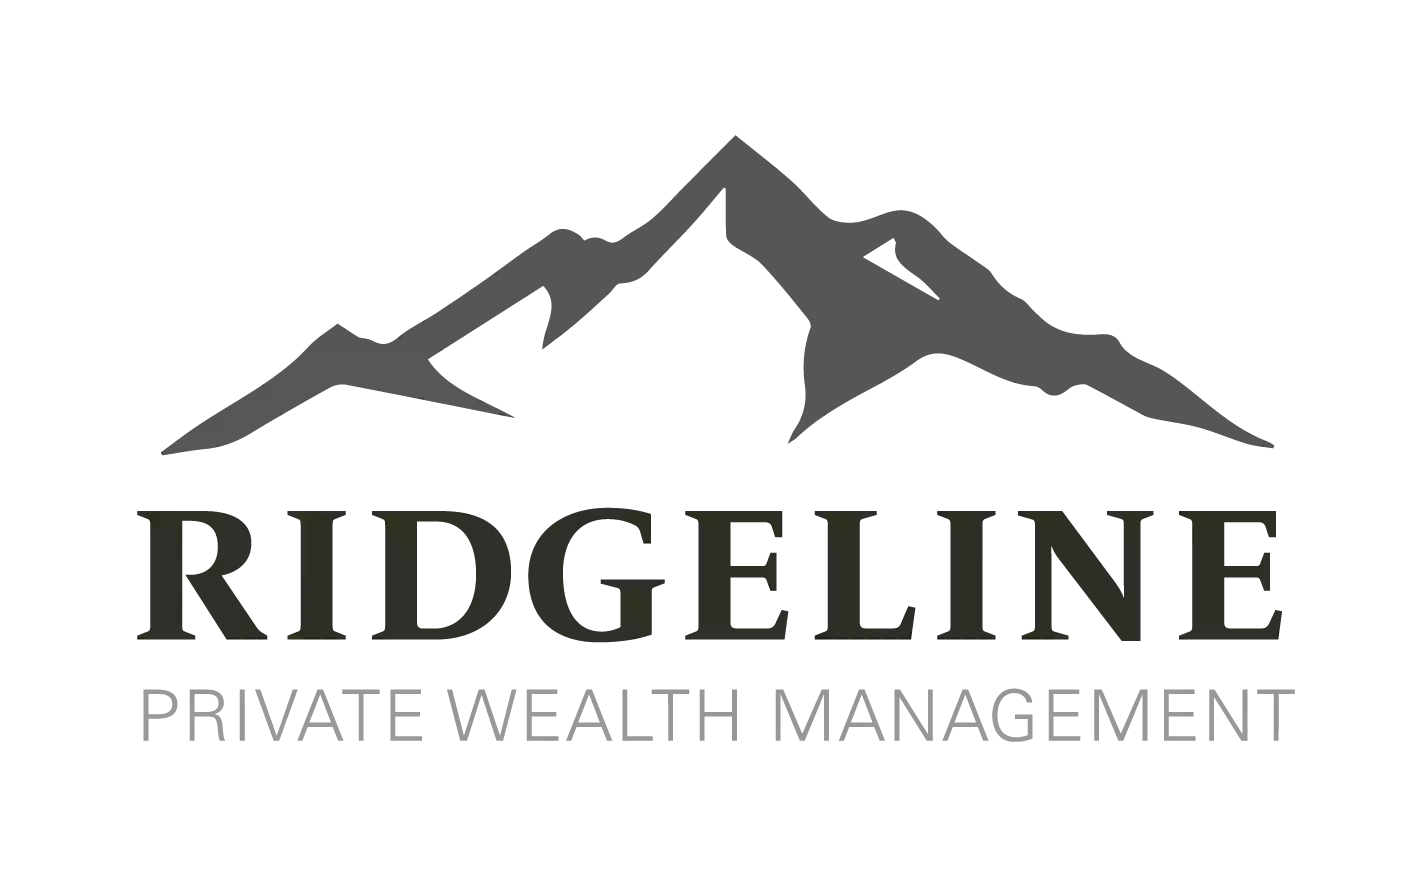 Ridgeline Private Wealth Management